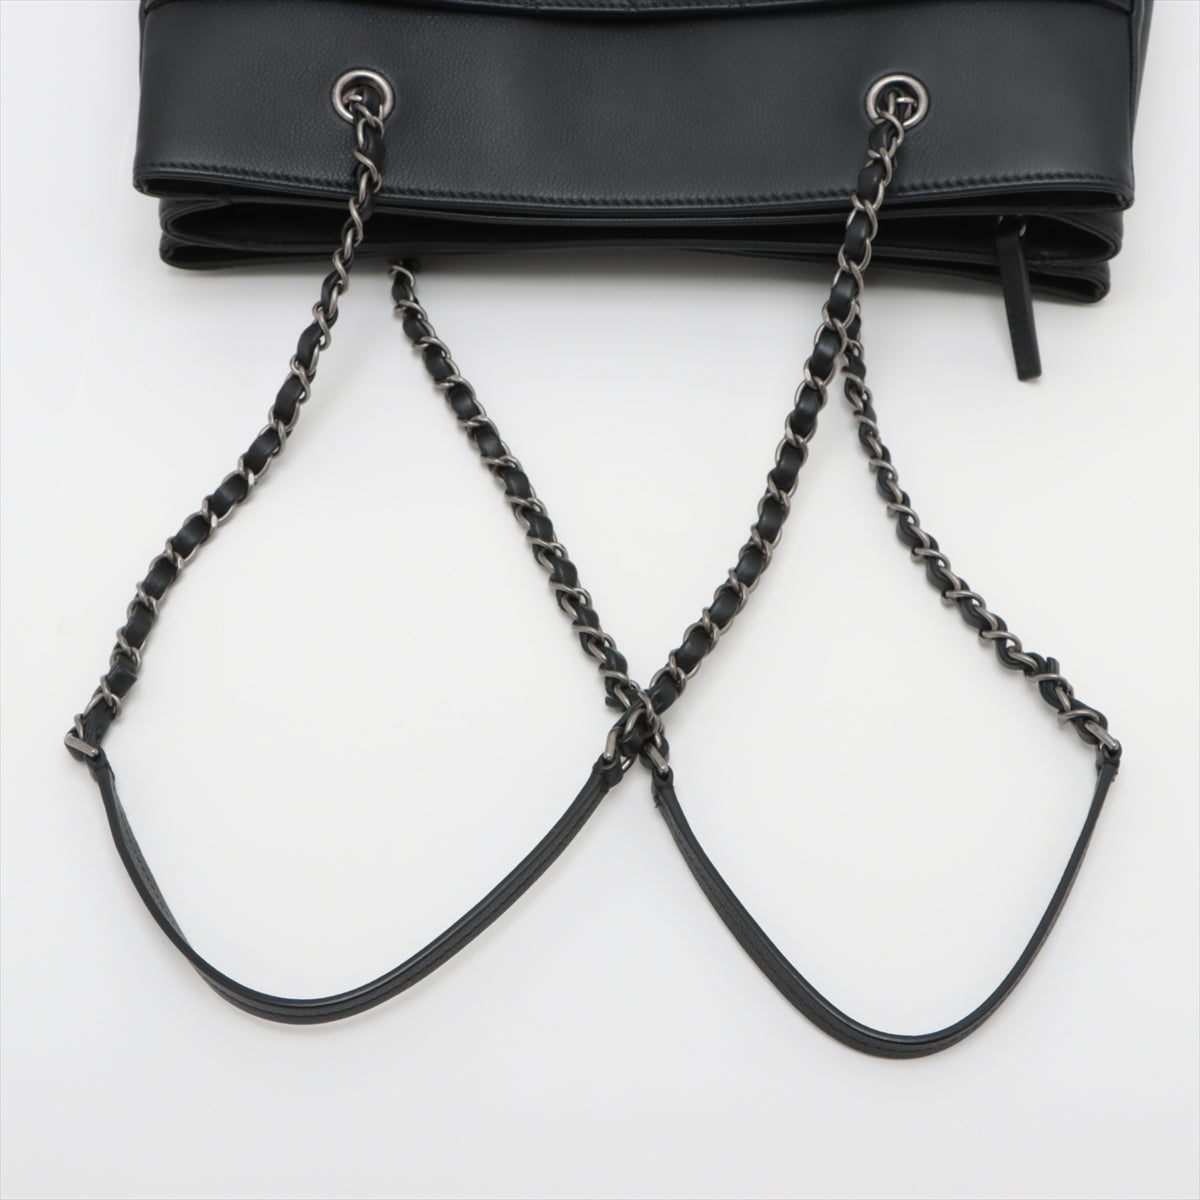 Chanel Matelasse Soft Caviarskin Chain Tote Bag Black Silver Metal Fittings 25XXXXXX